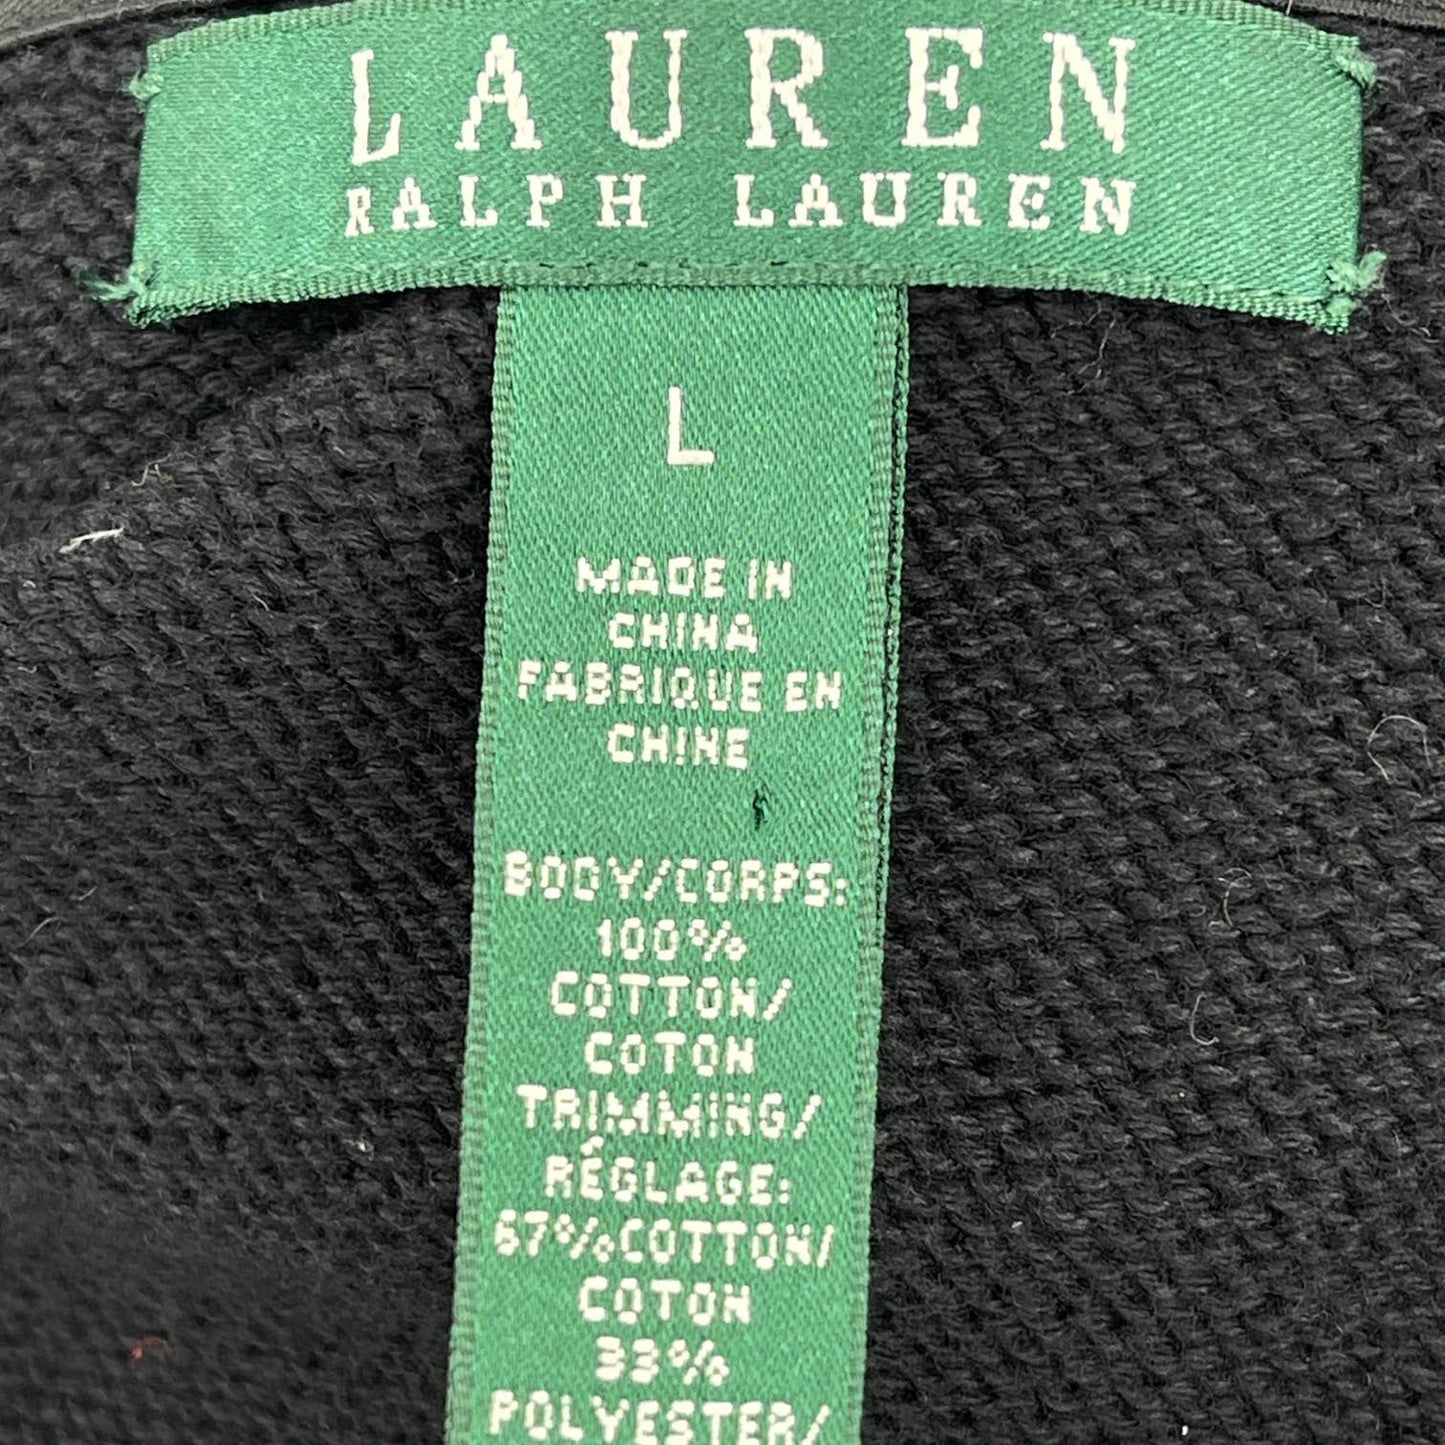 Vintage Y2K Black Cardigan Jacket Double Breasted Buttons Lauren Ralph Lauren L